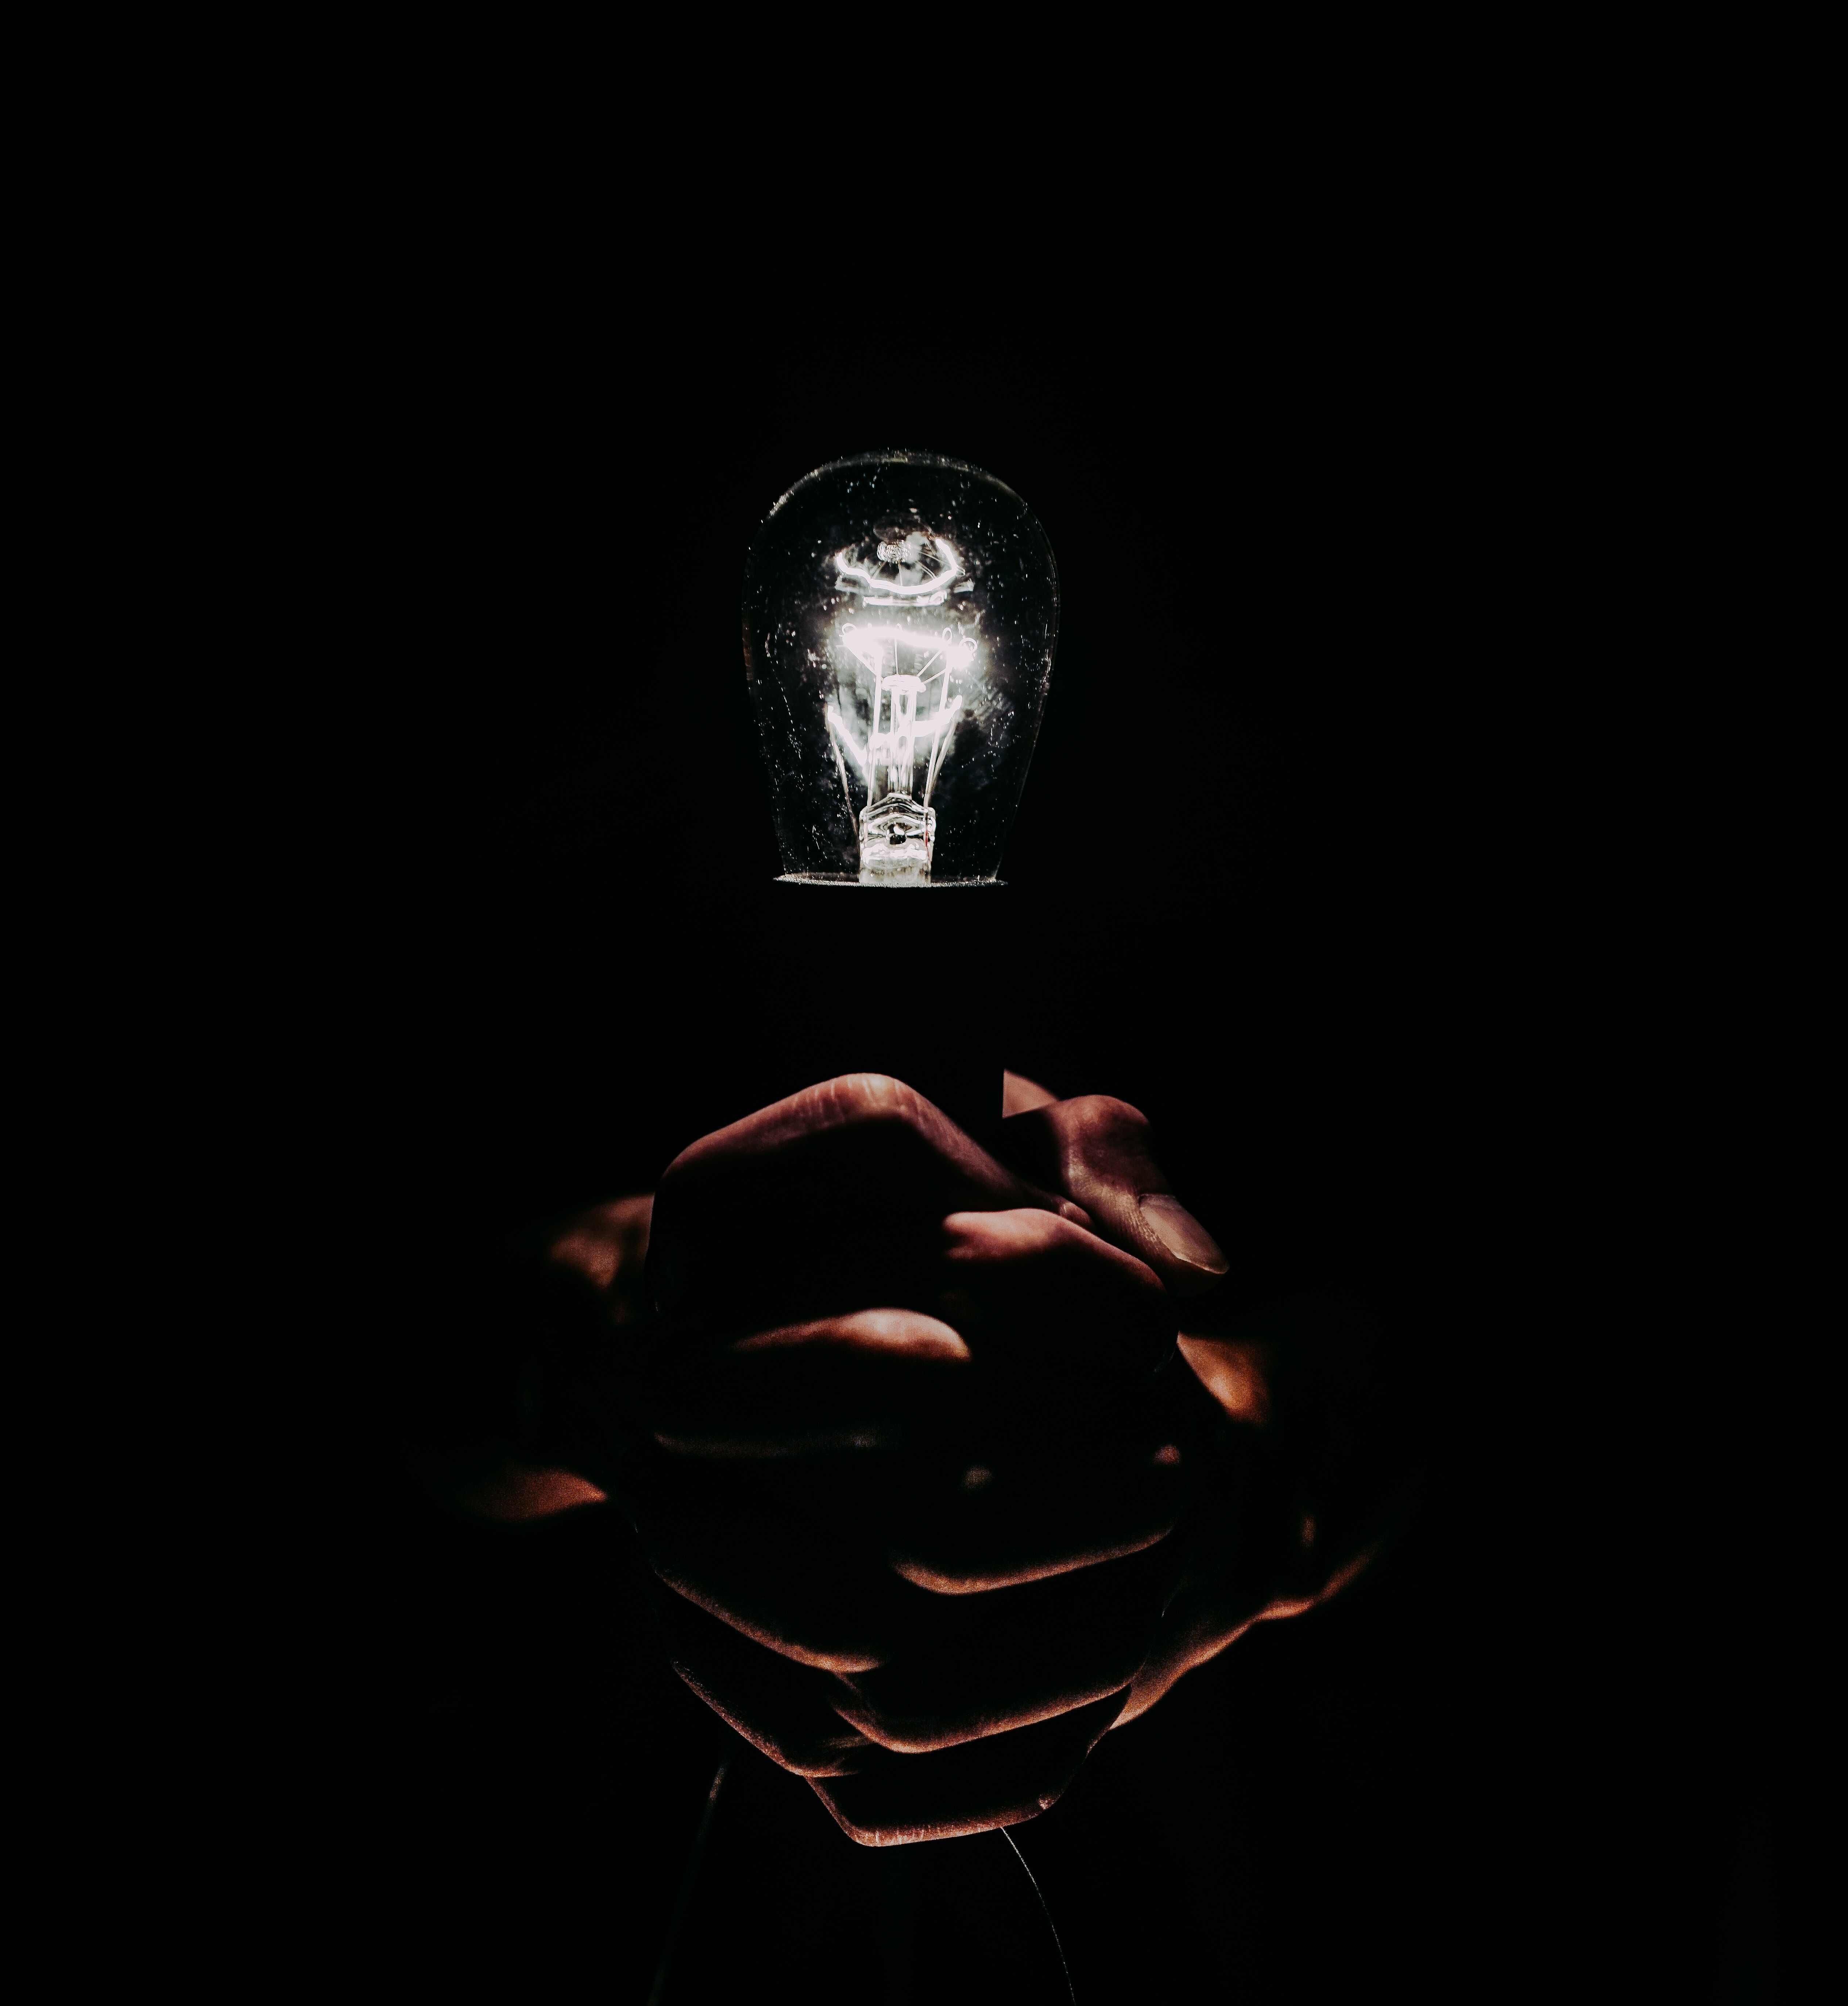 dark, shine, light, hands, darkness, fingers, light bulb, electric